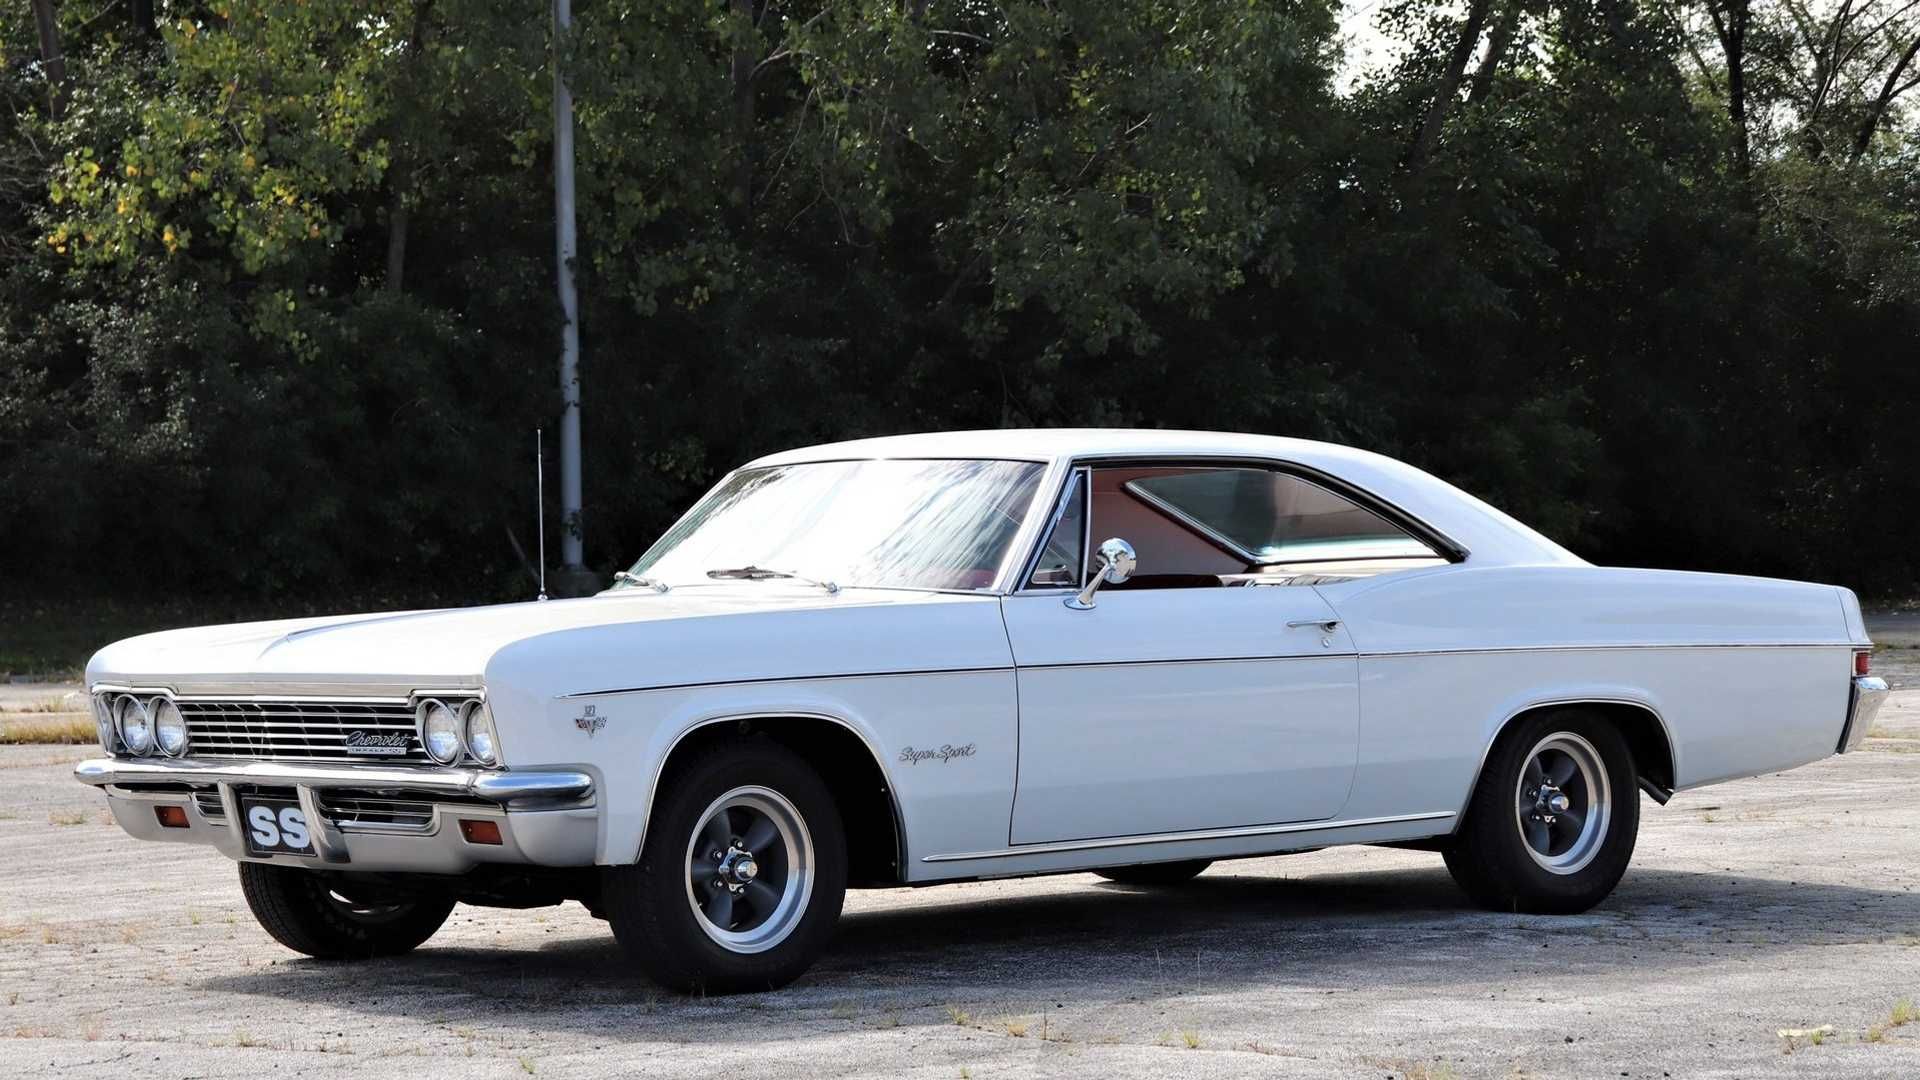 A 1966 Chevy Impala On The Street